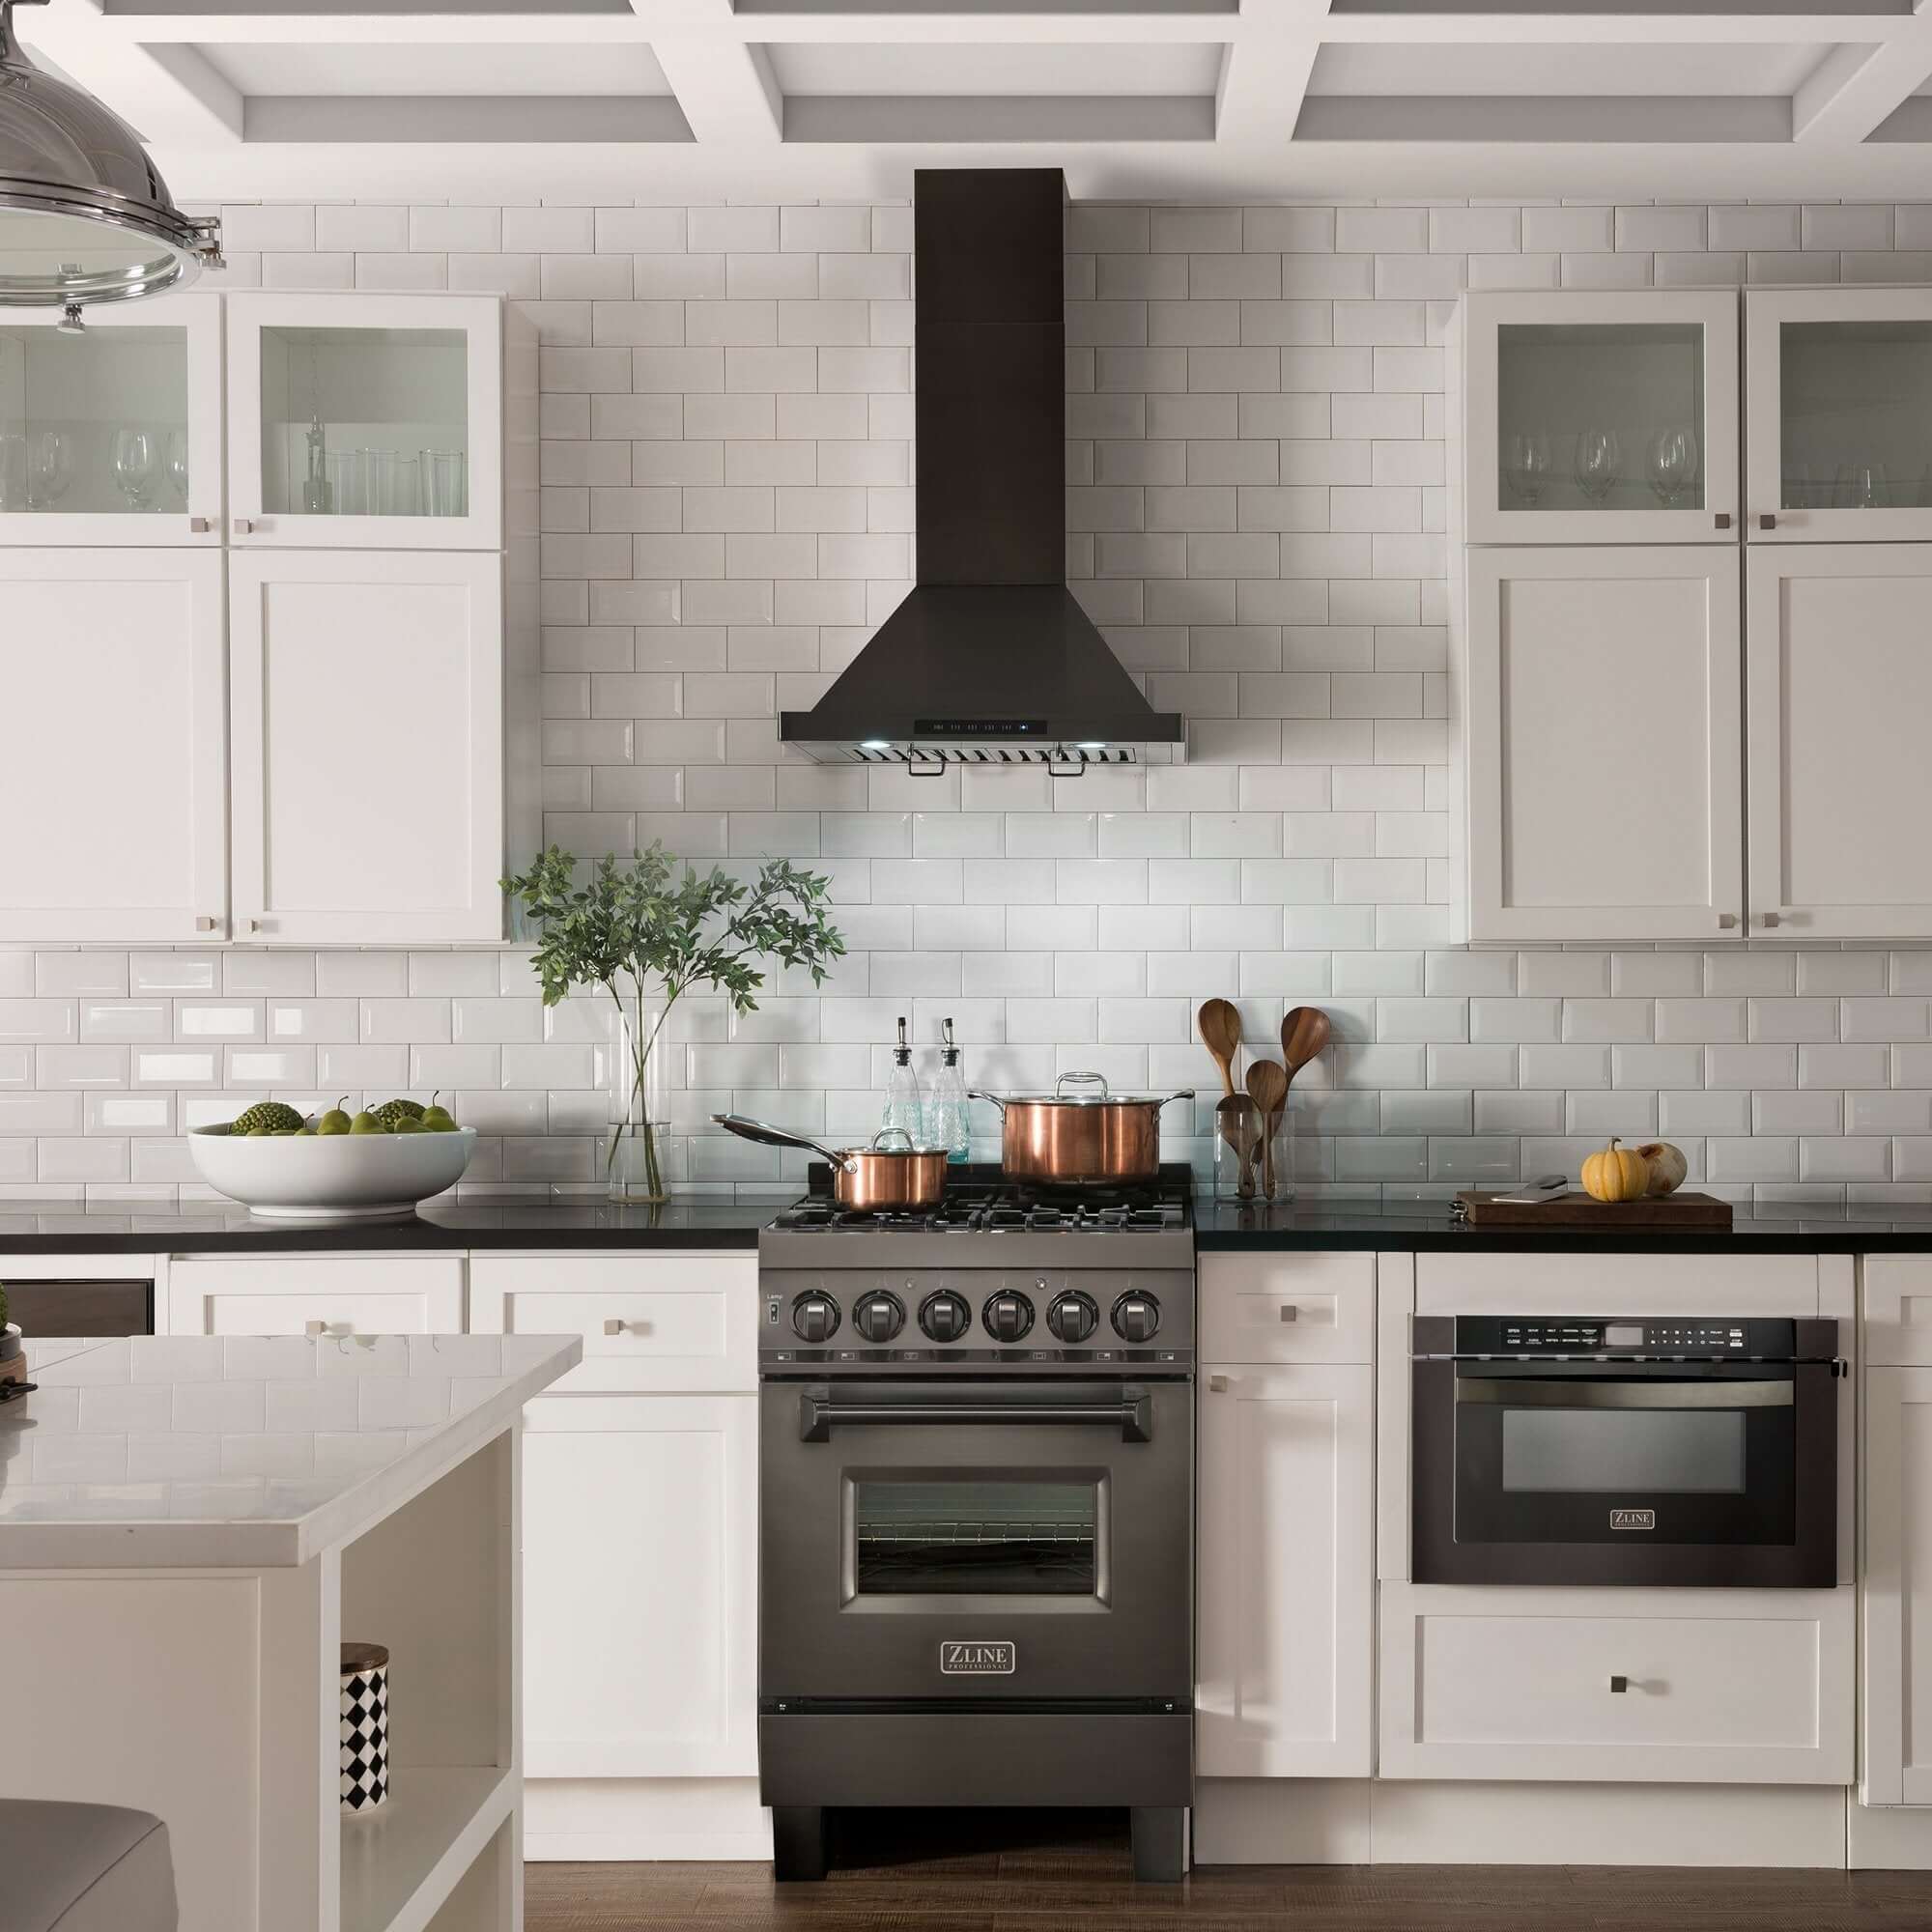 ZLINE black stainless steel wall mount range hood and range in a white farmhouse-style kitchen.